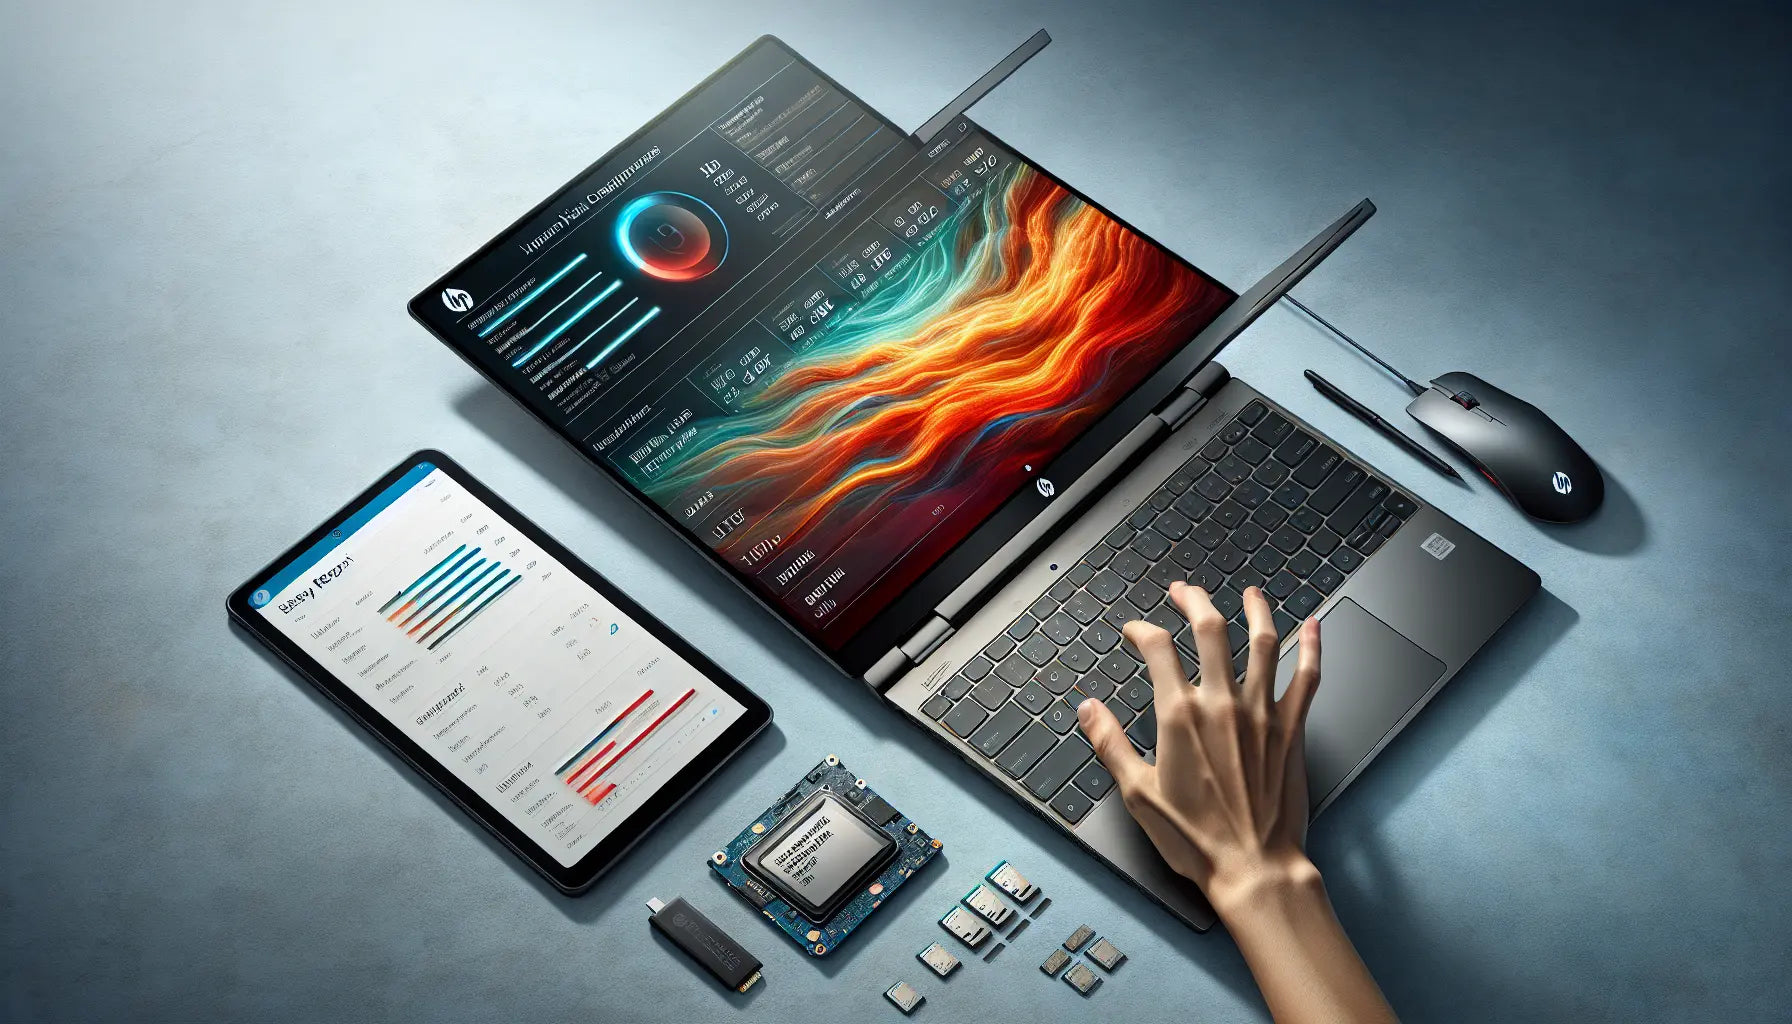 HP EliteBook 840 G3, I7 6th Gen, 256SSD Laptop - A Comprehensive Review